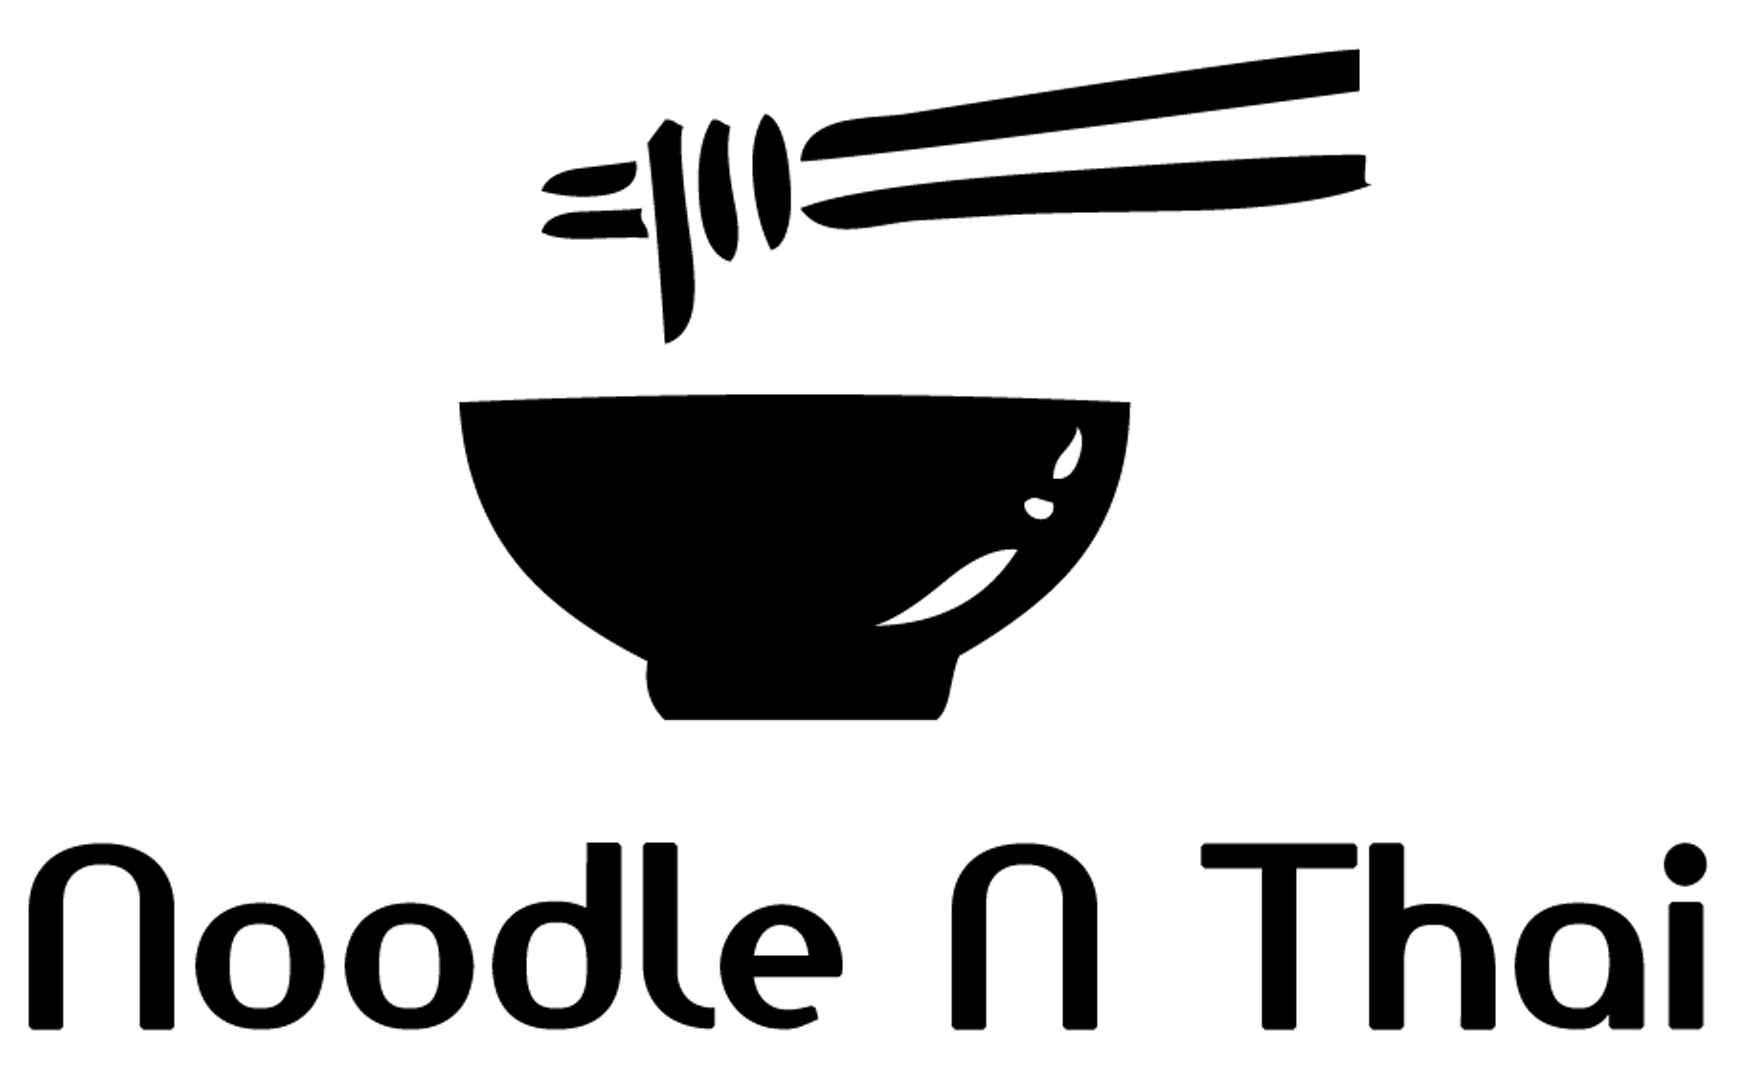 Noodle N Thai